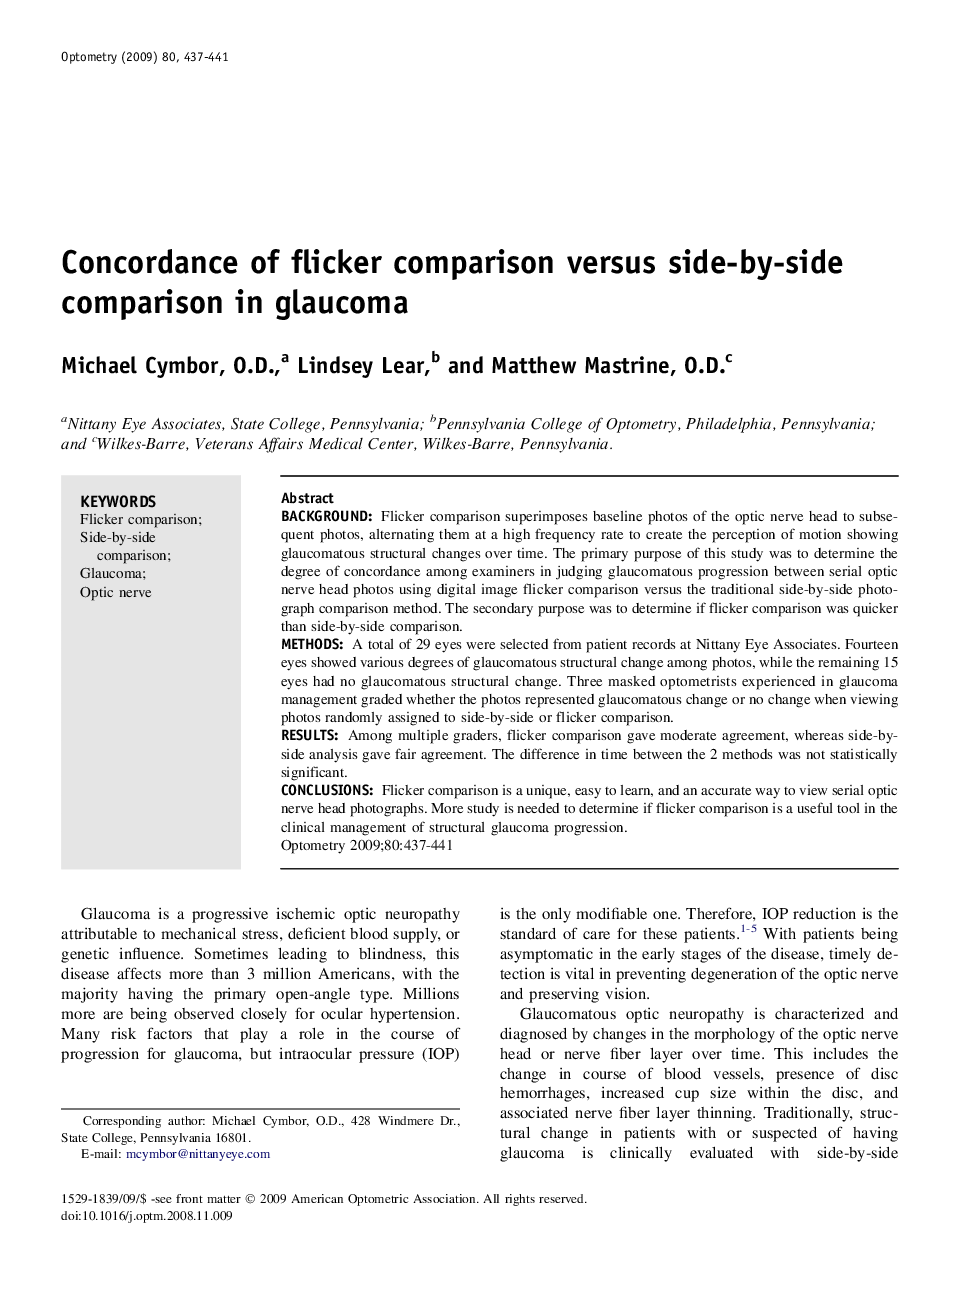 Concordance of flicker comparison versus side-by-side comparison in glaucoma